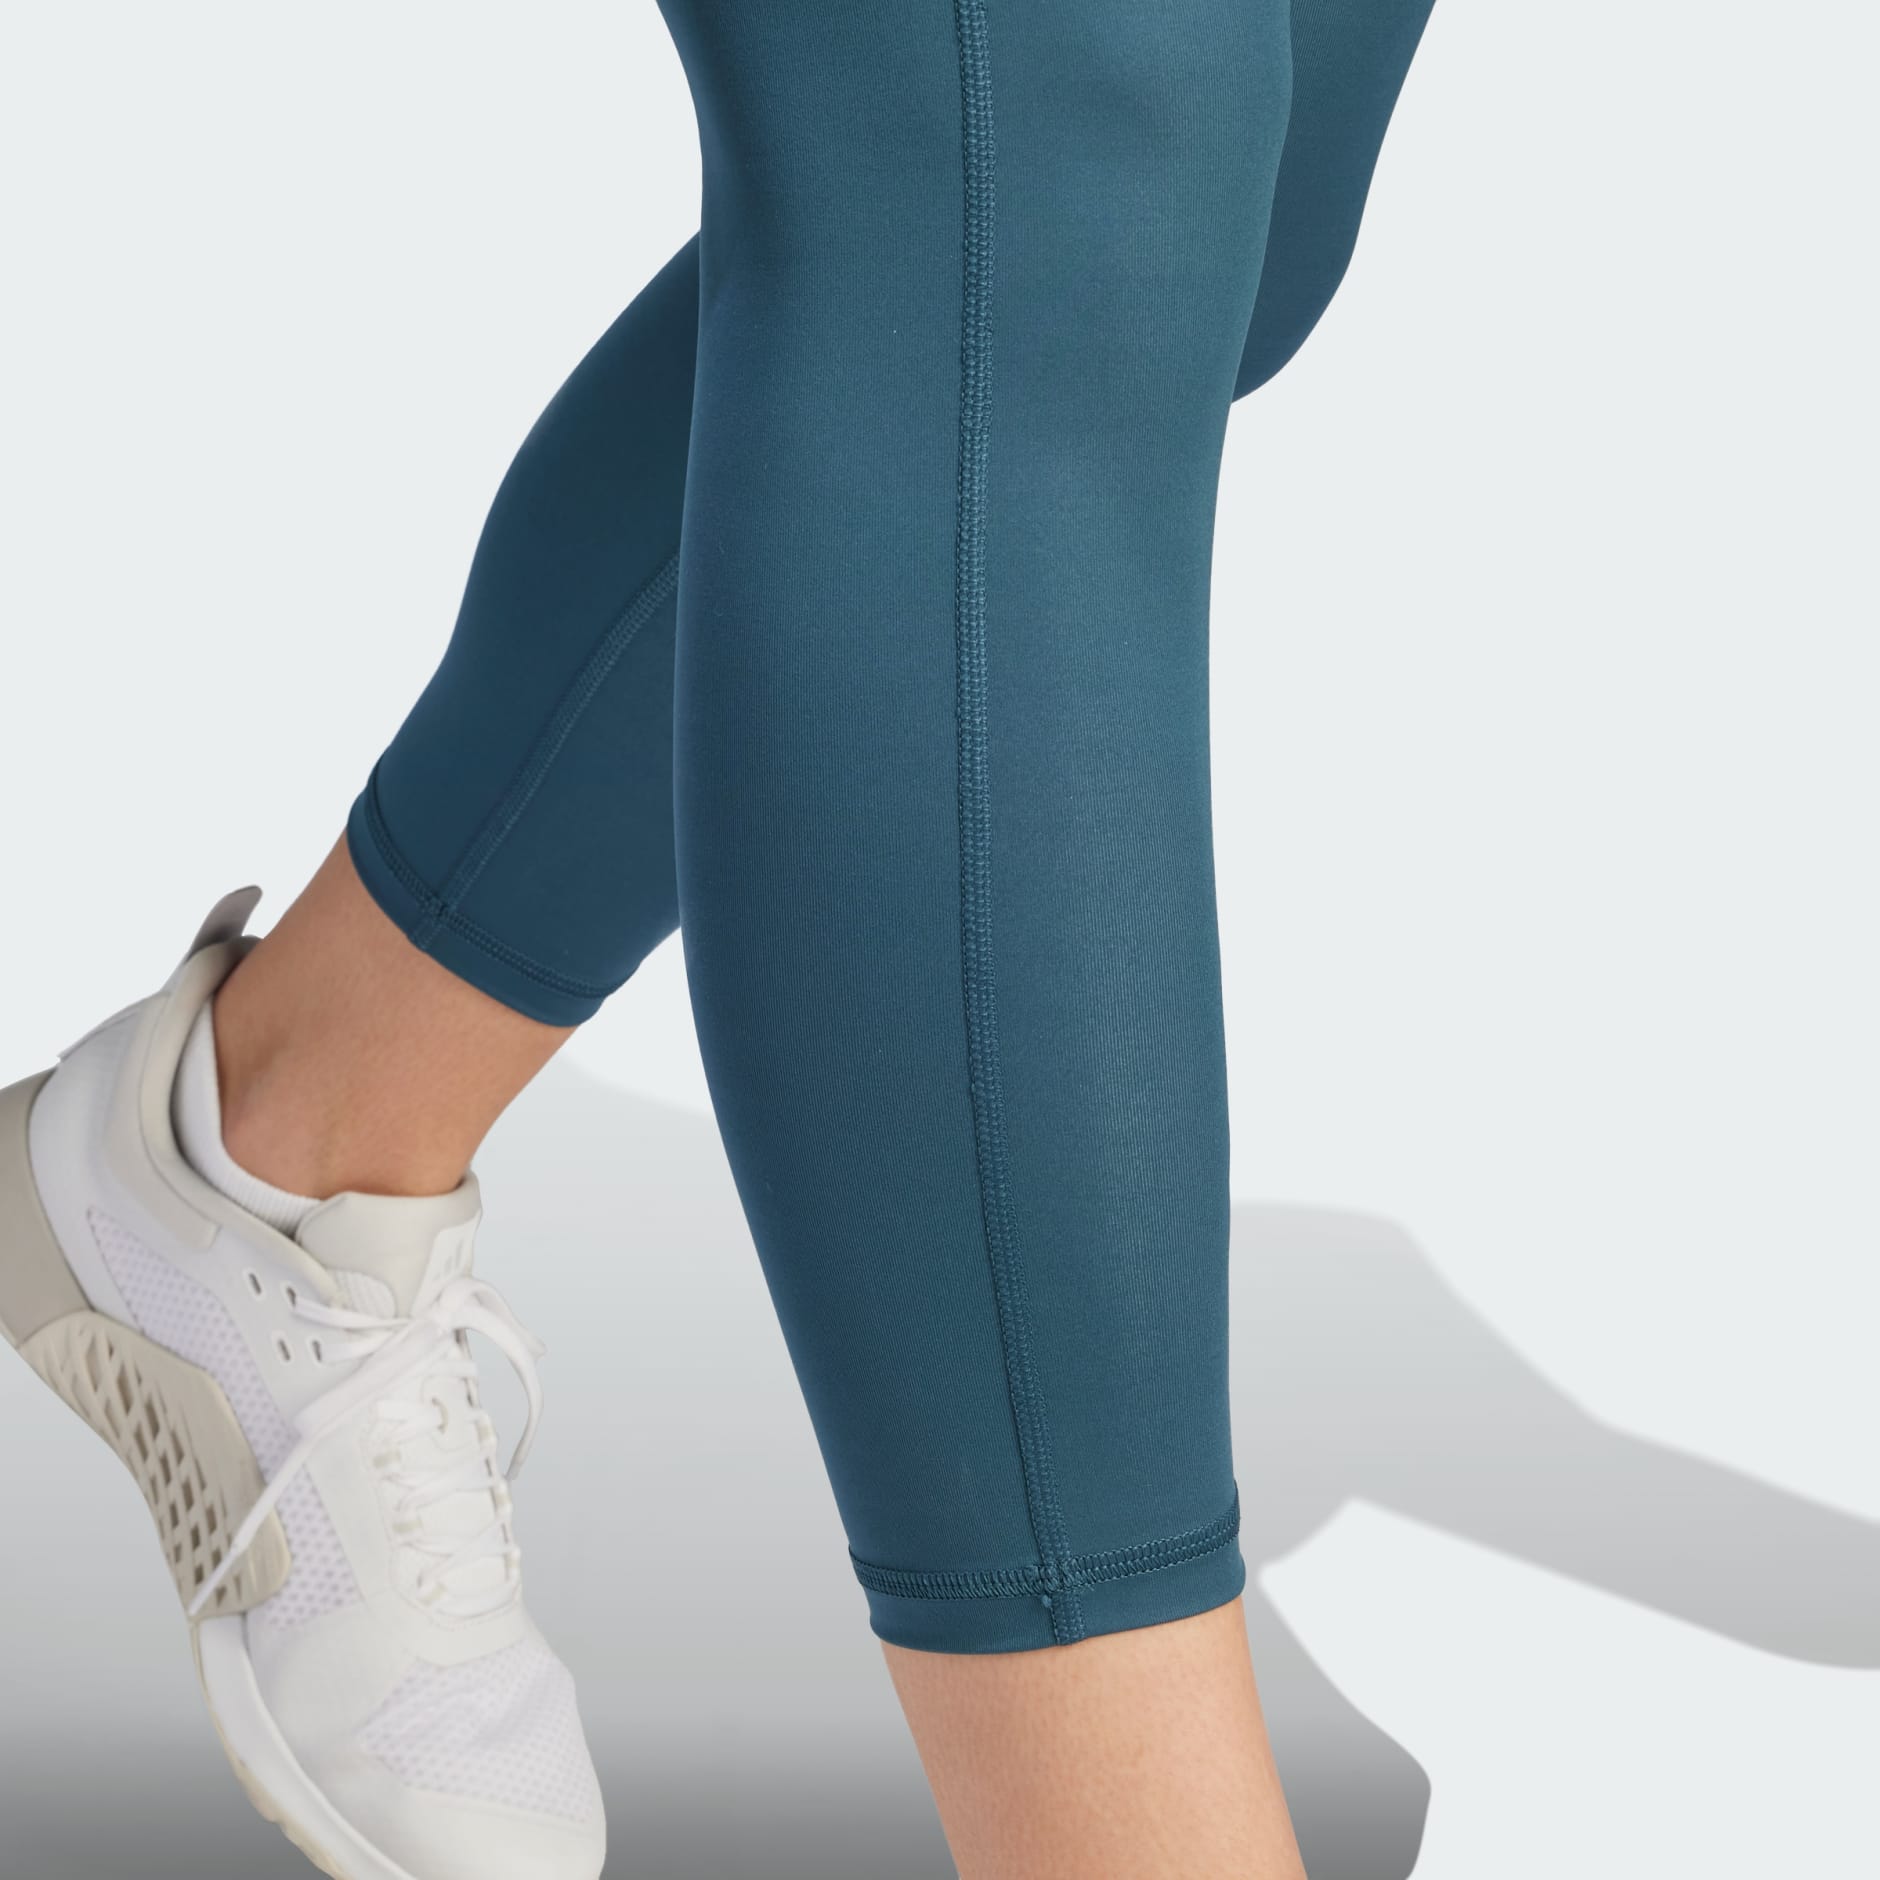 Women's Clothing - Optime Stash Pocket High-Waisted 7/8 Leggings -  Turquoise